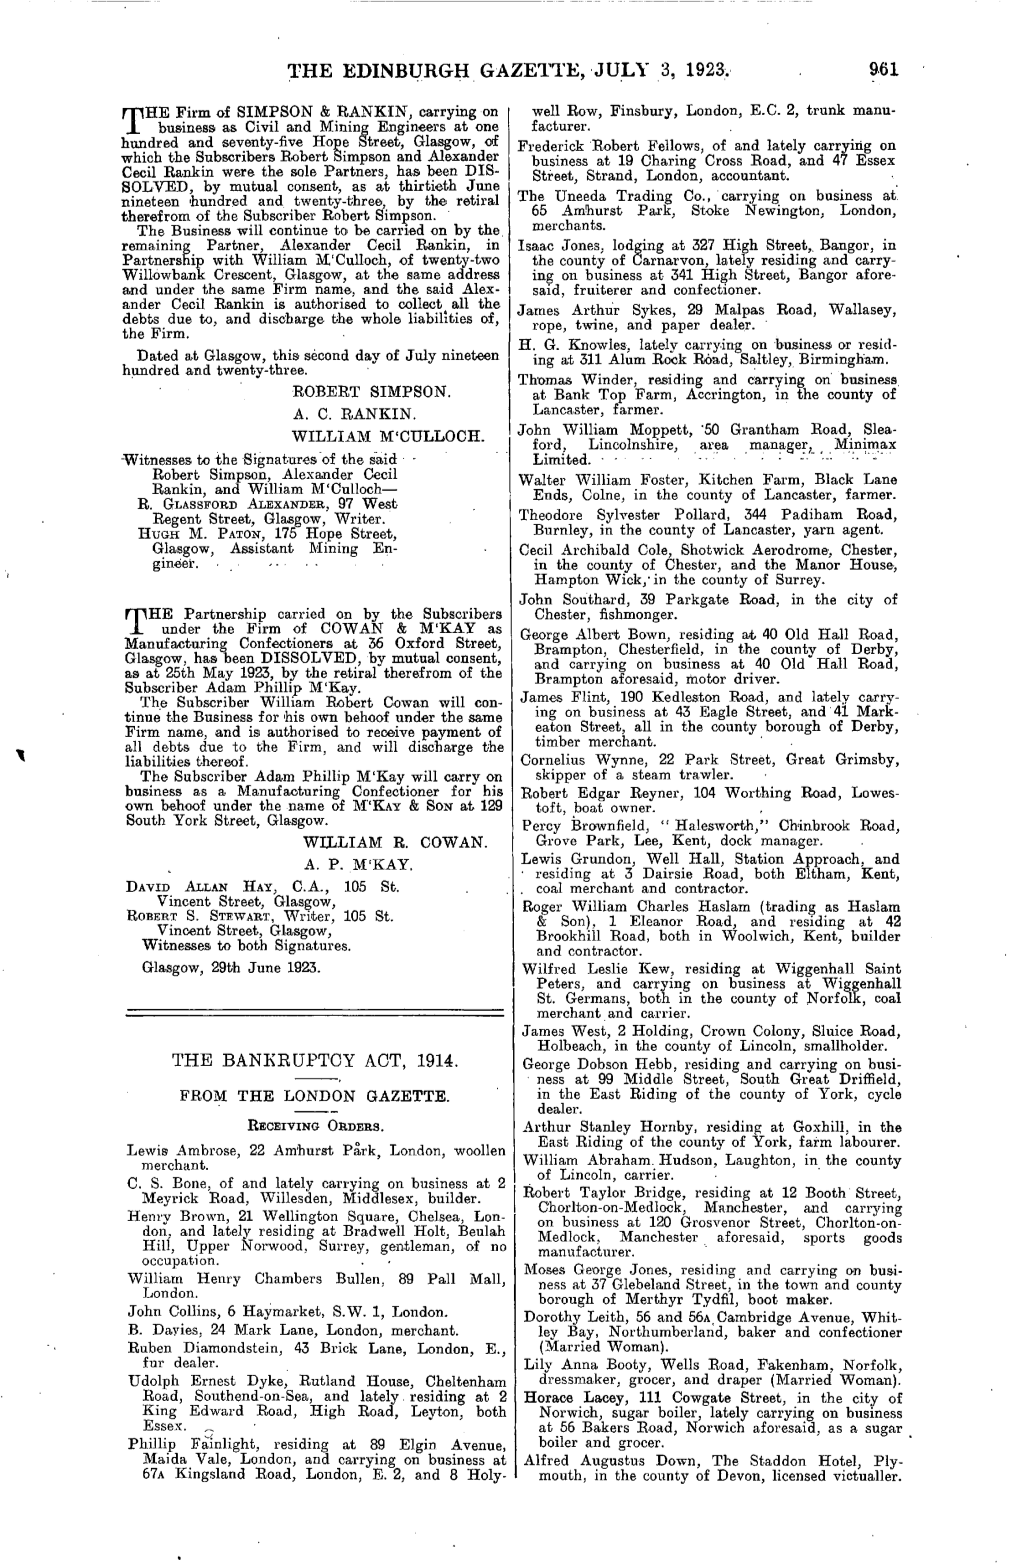 The Edinburgh Gazette, July 3, 1923, the Bankruptcy Act